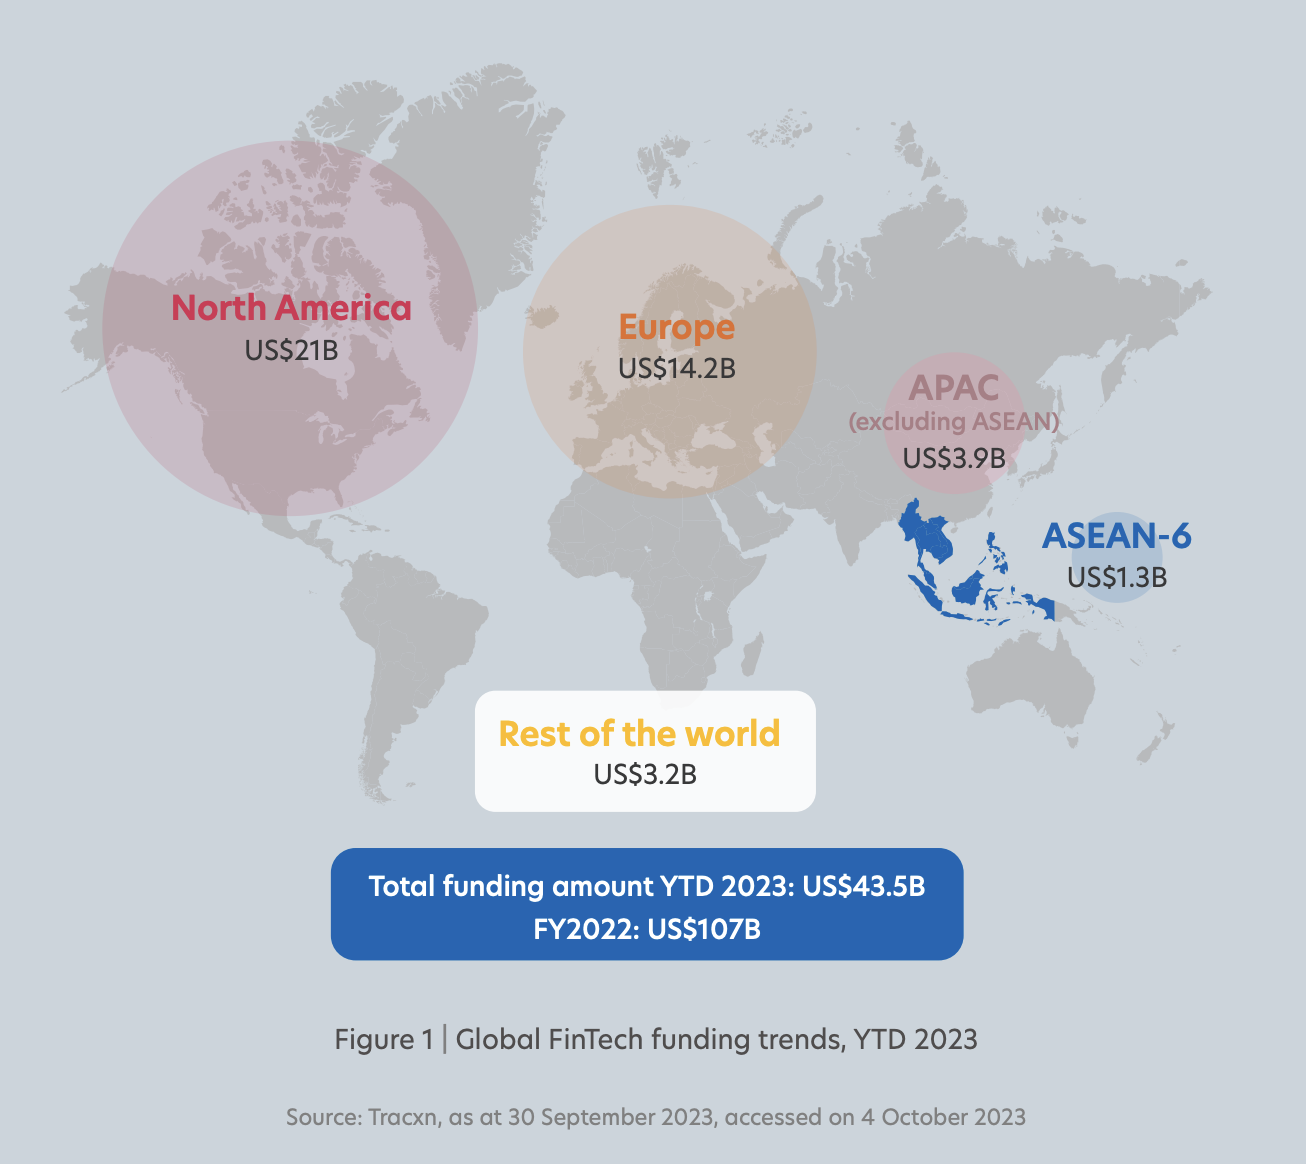 Globale Finrech-Finanzierungstrends, YTD 2023, Quelle: Fintech in ASEAN 2023: Seeding the Green Transition, UOB, PwC Singapur und die Singapore Fintech Association (SFA), November 2023